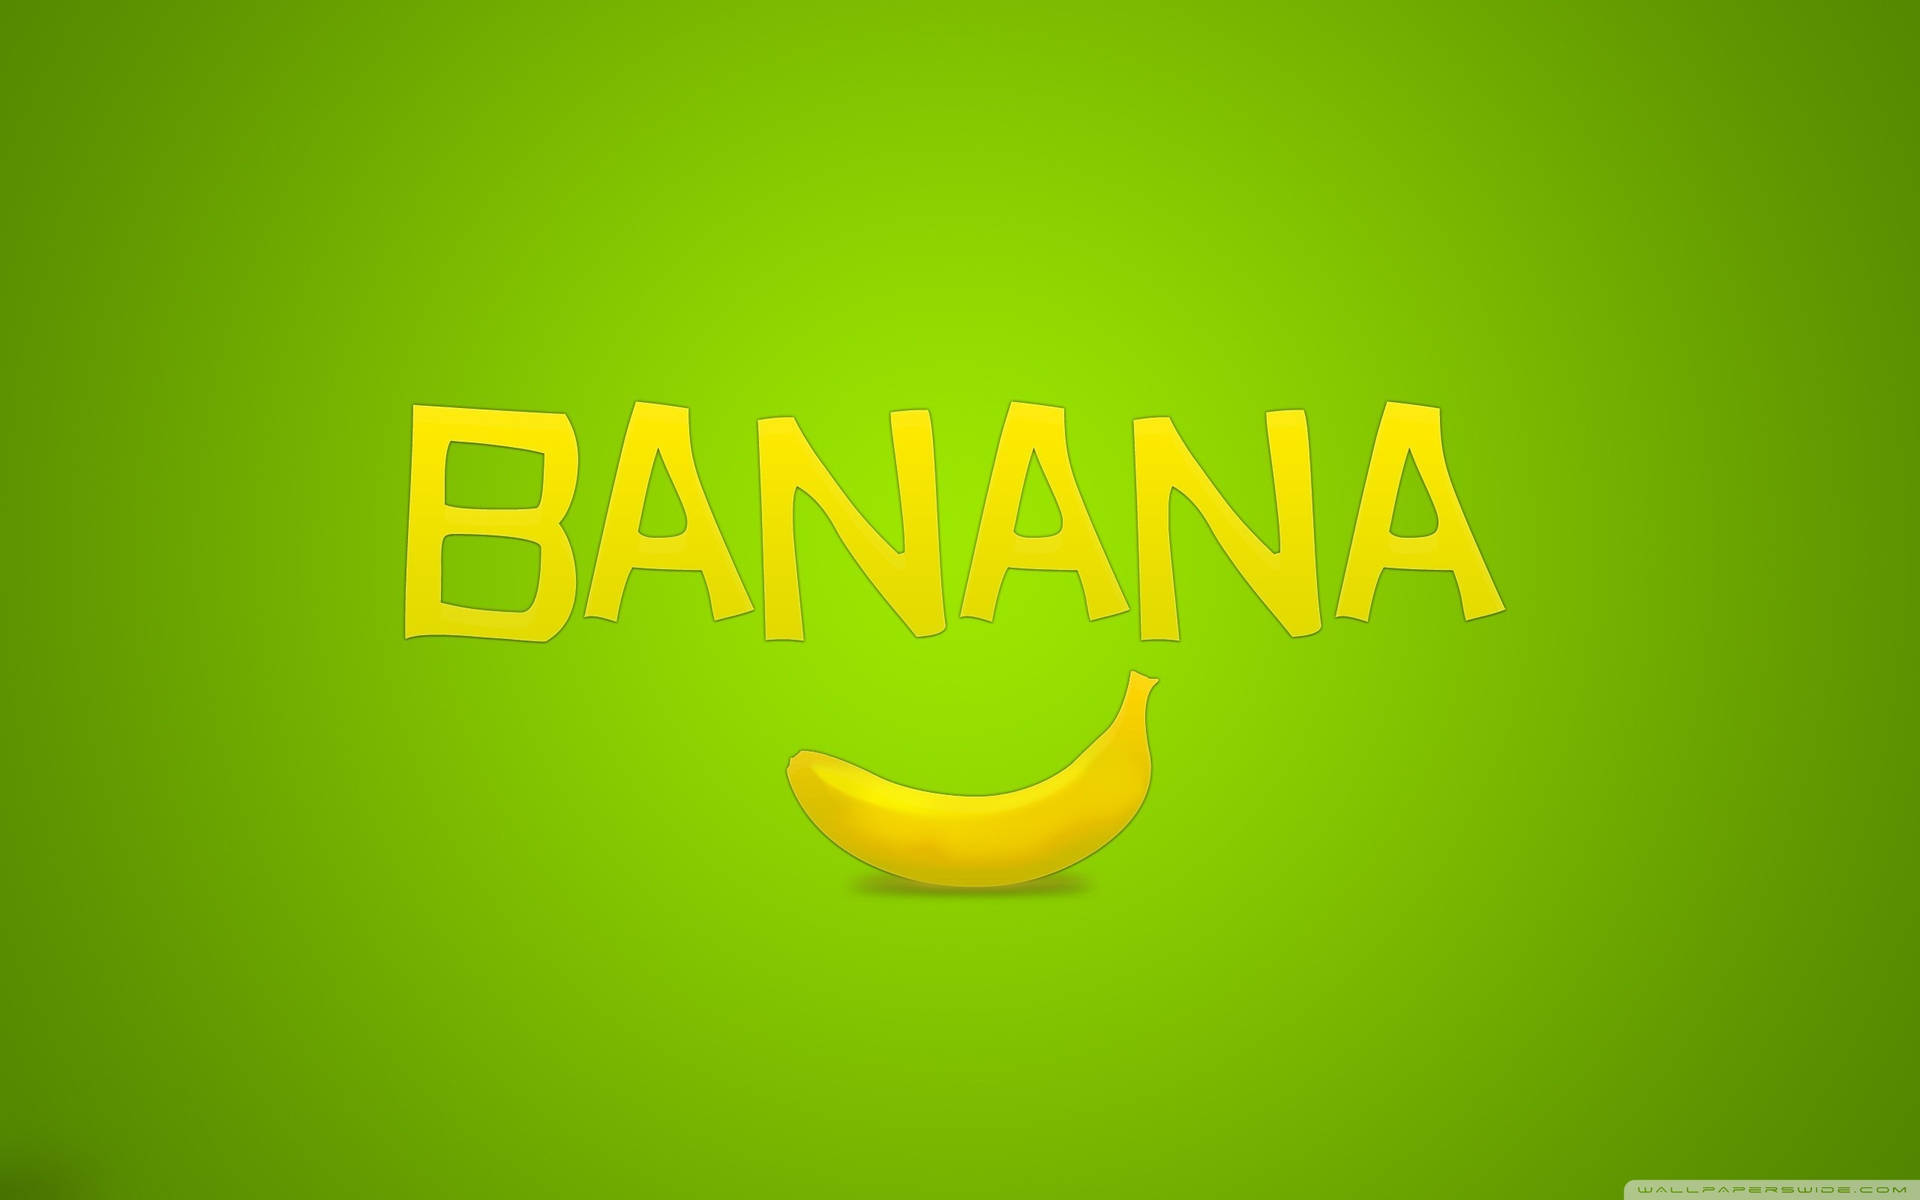 Banana 2560X1600 Wallpaper and Background Image